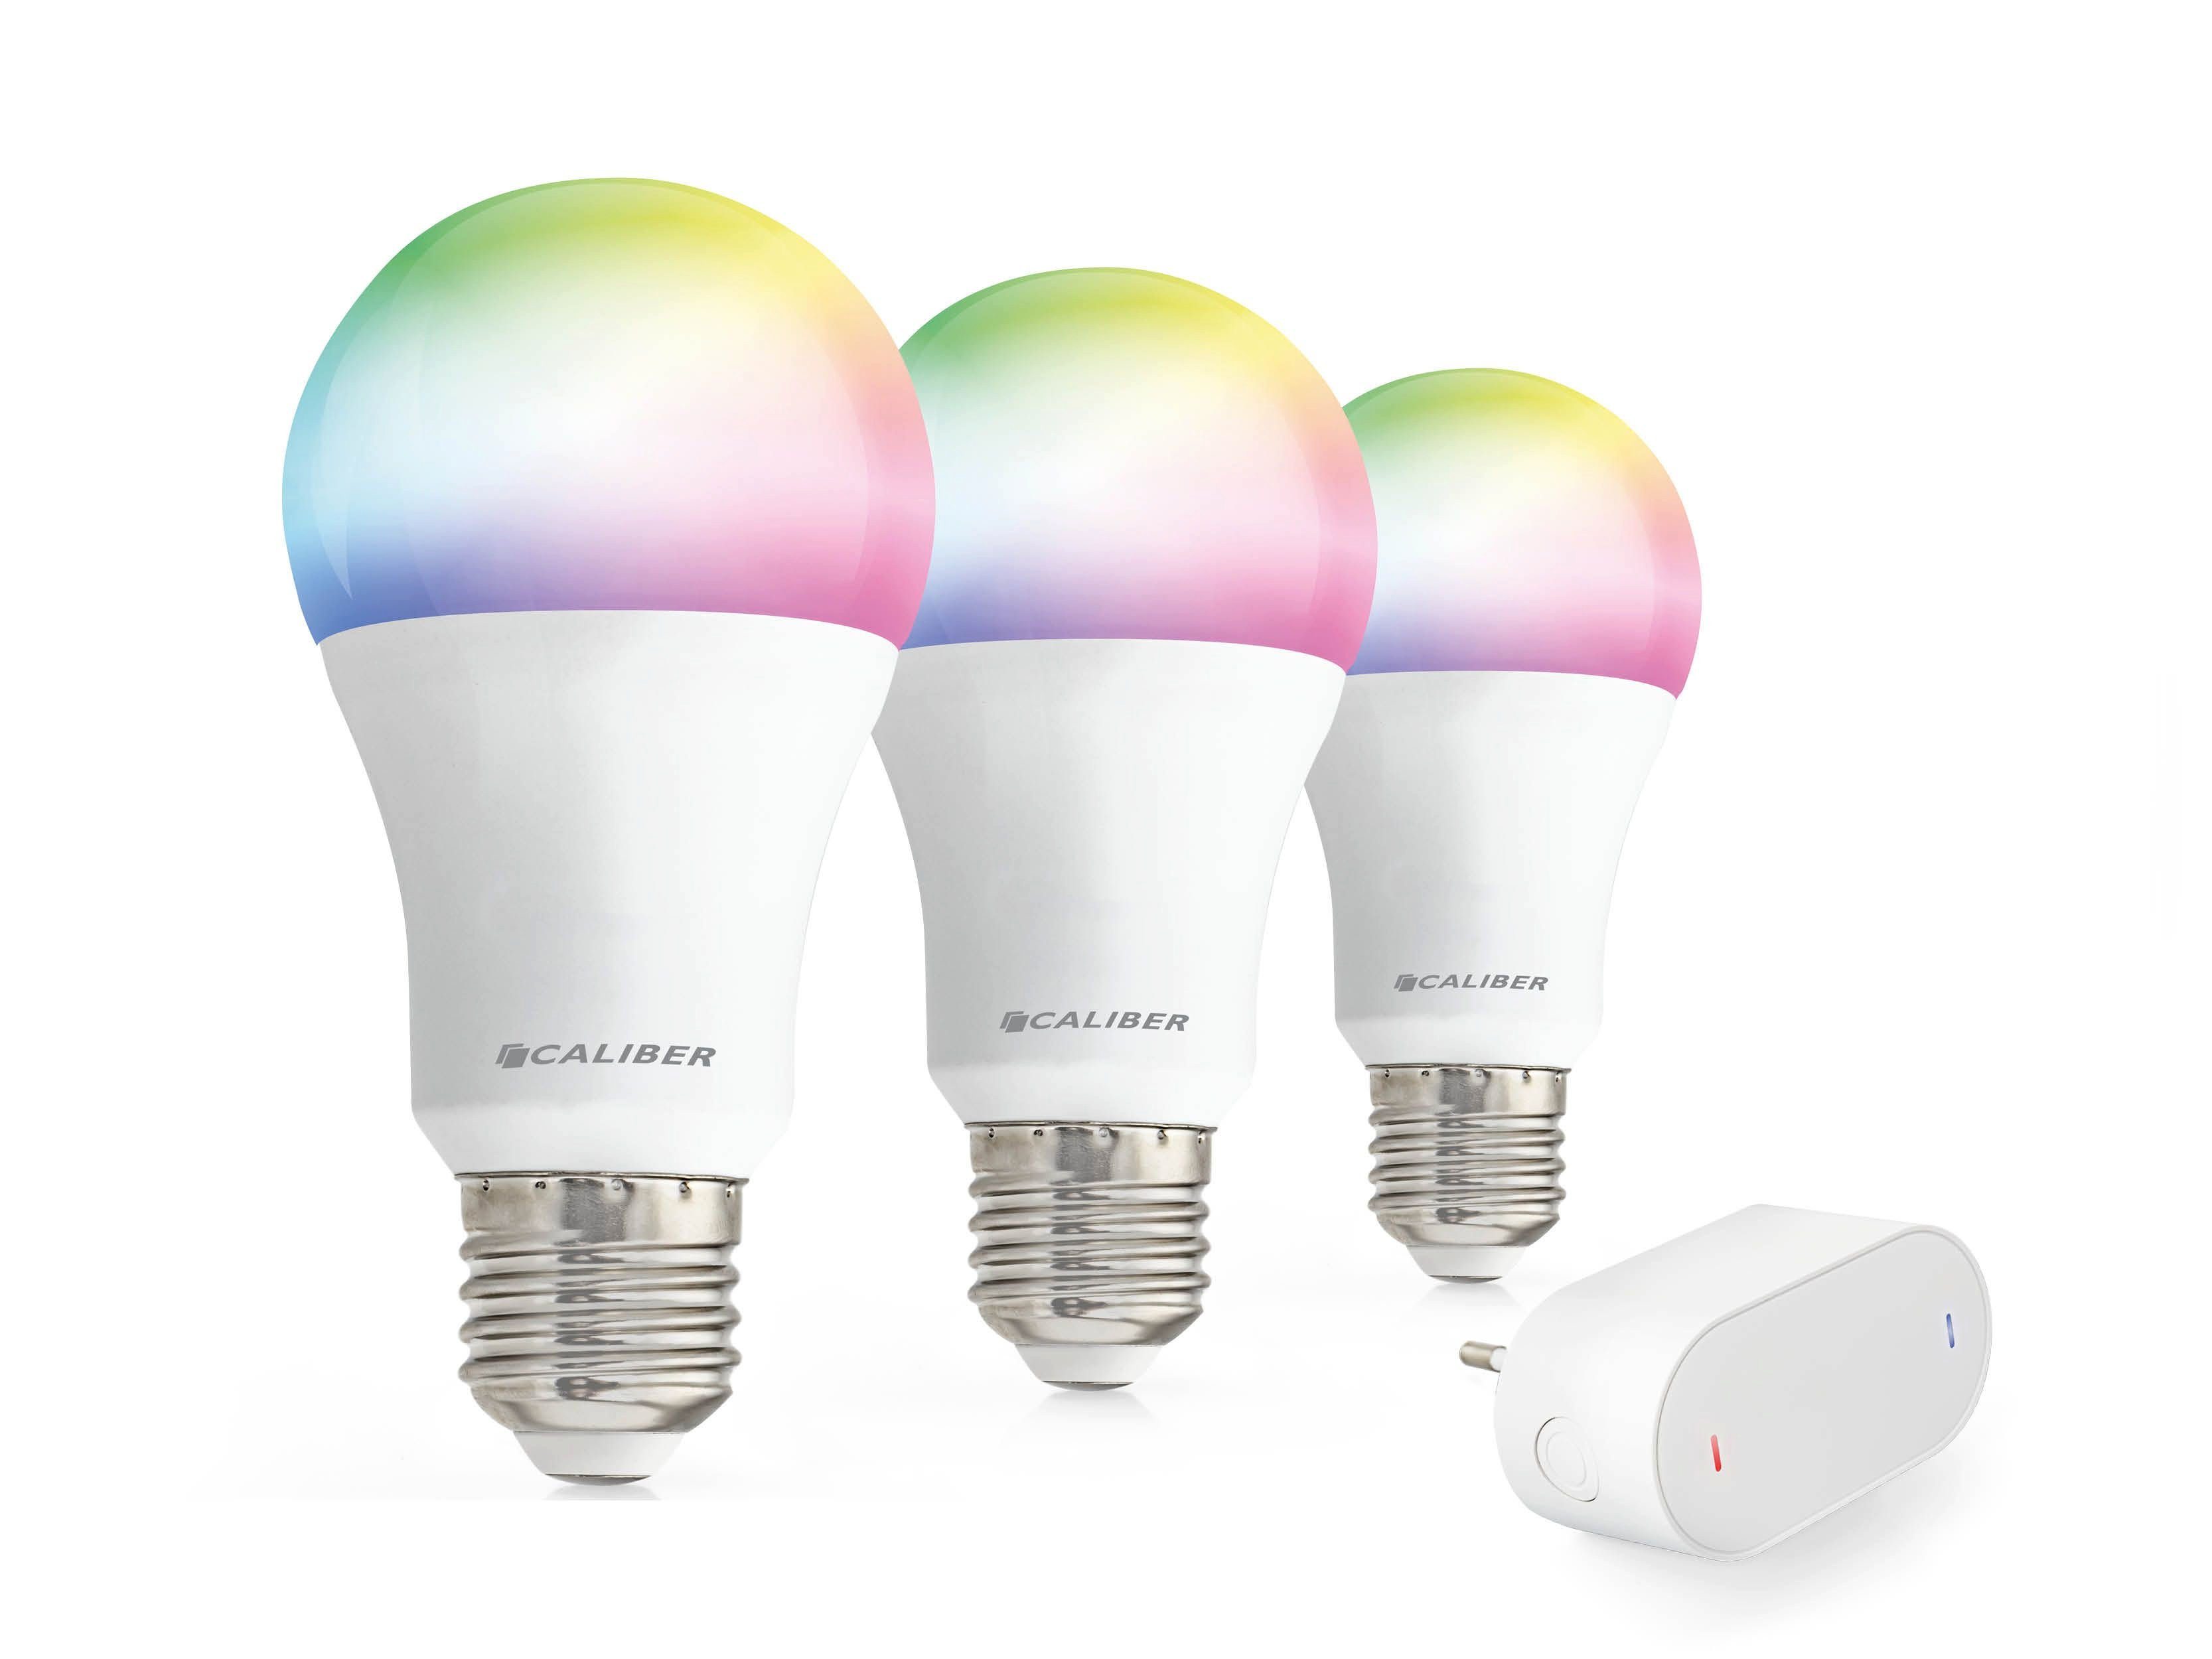 Caliber »E27 LED Lampe Starter Set, drei Lampen inkl. Gateway. 16 Mio.  Farben, steuerbar via Caiber App, kompatibel mit Amazon Alexa (Echo, Echo  Dot)« Smart-Home Starter-Set online kaufen | OTTO